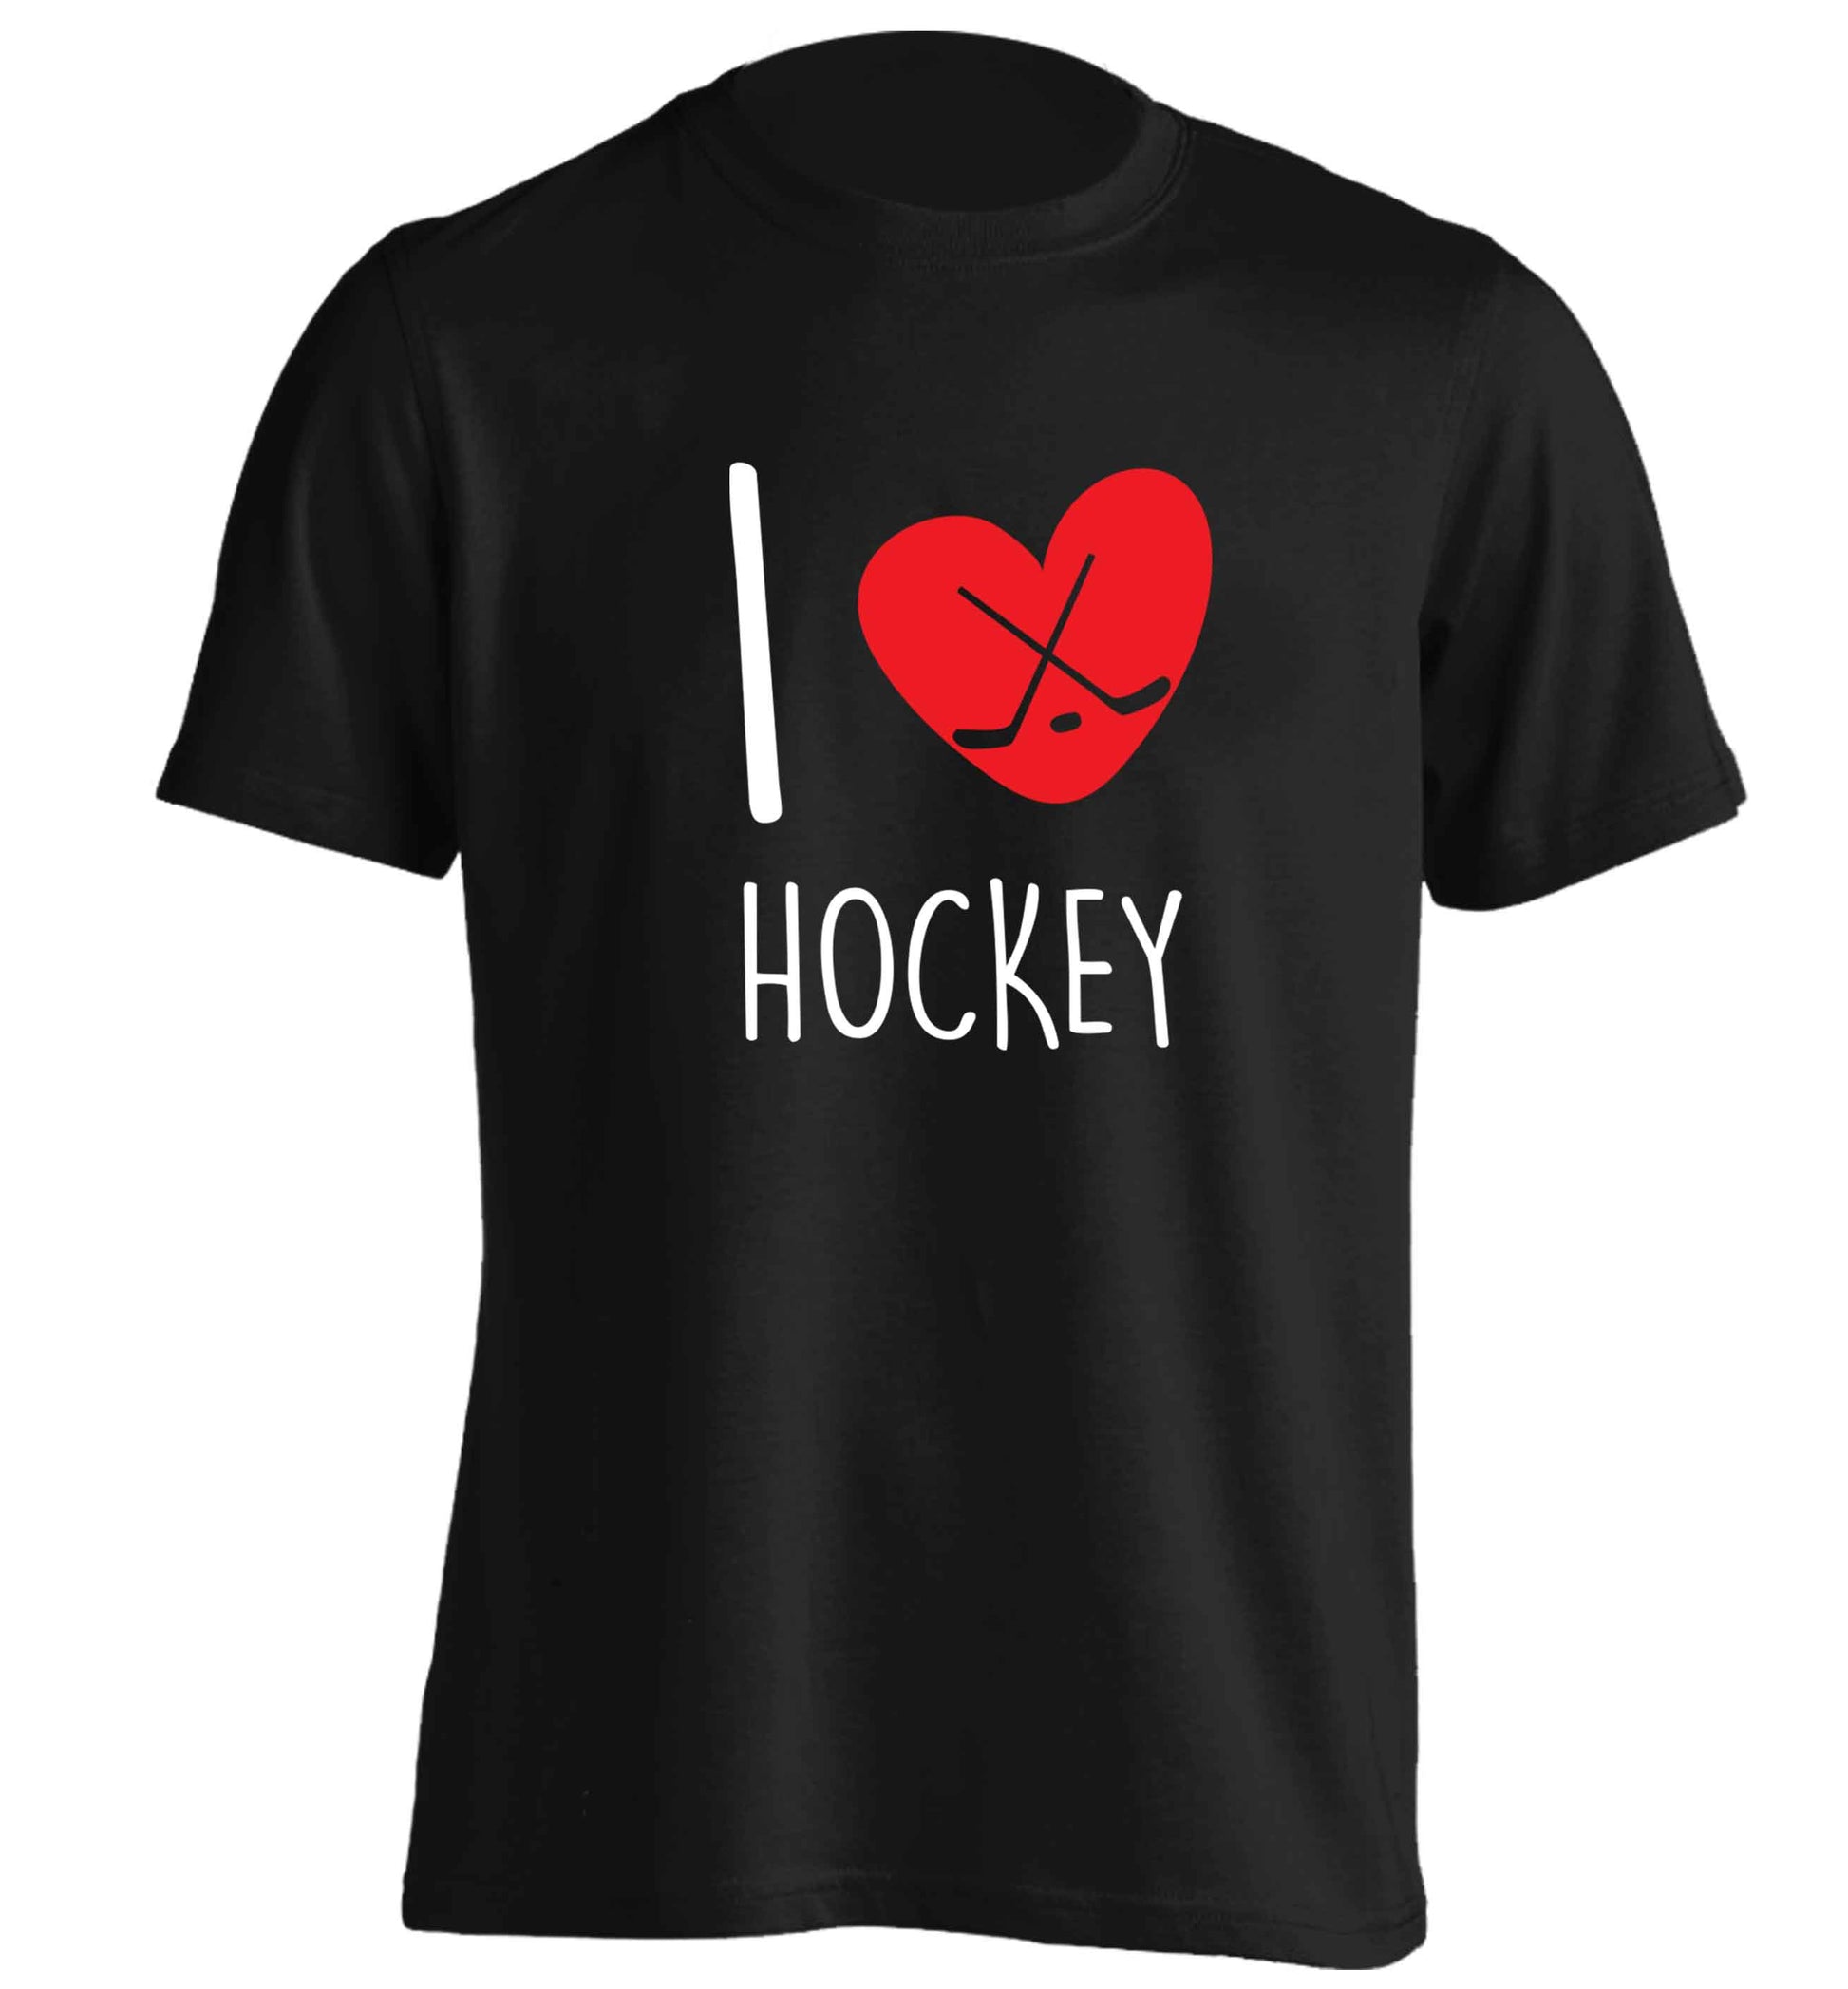 I love hockey adults unisex black Tshirt 2XL